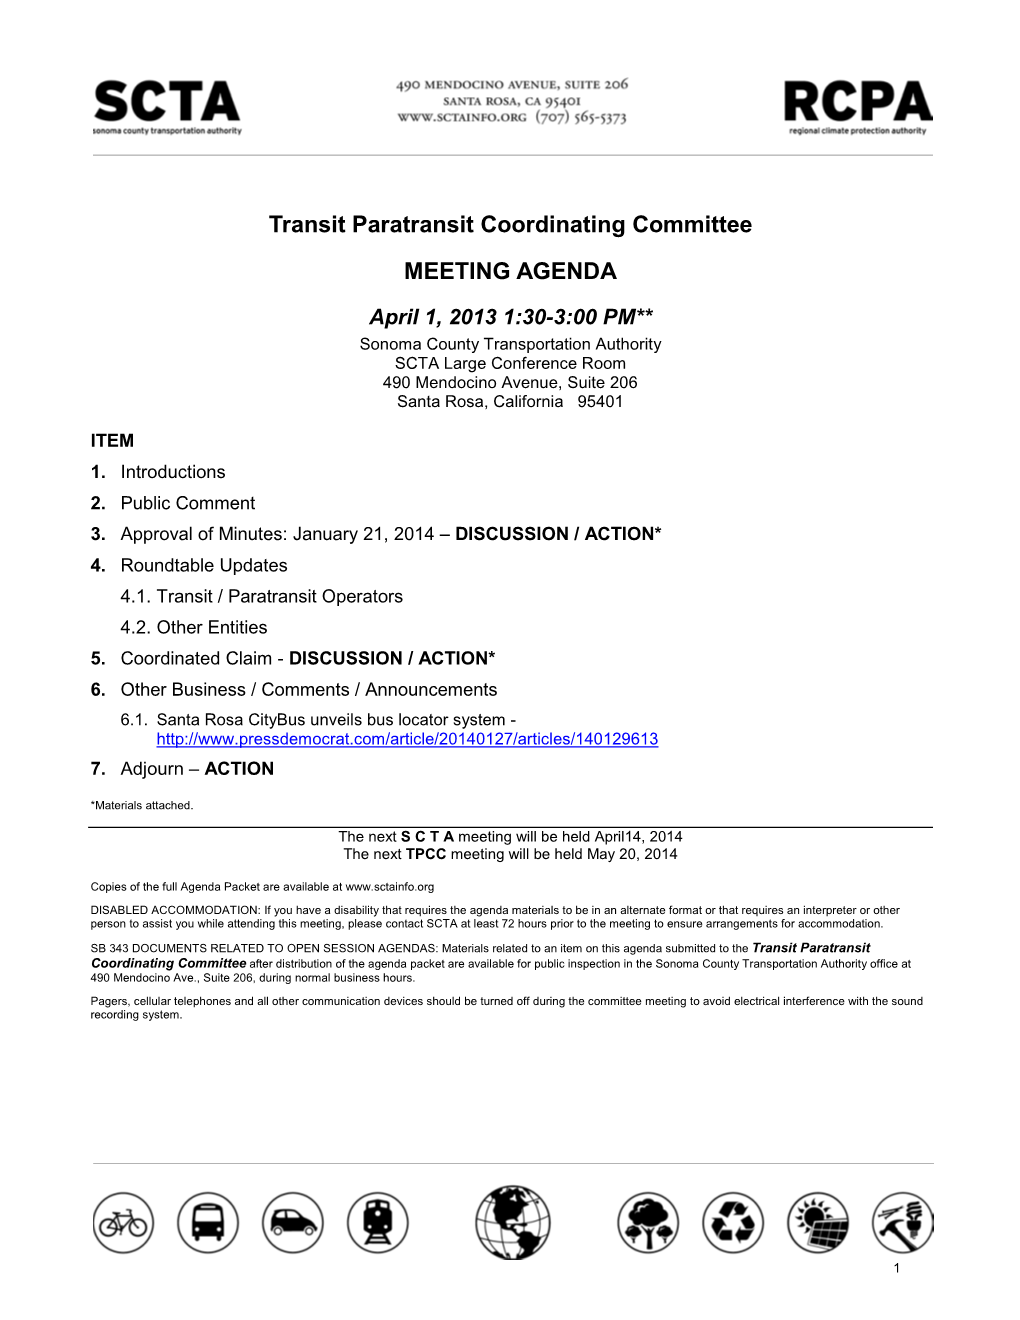 Transit-Paratransit Coordinating Committee Meeting Agenda For